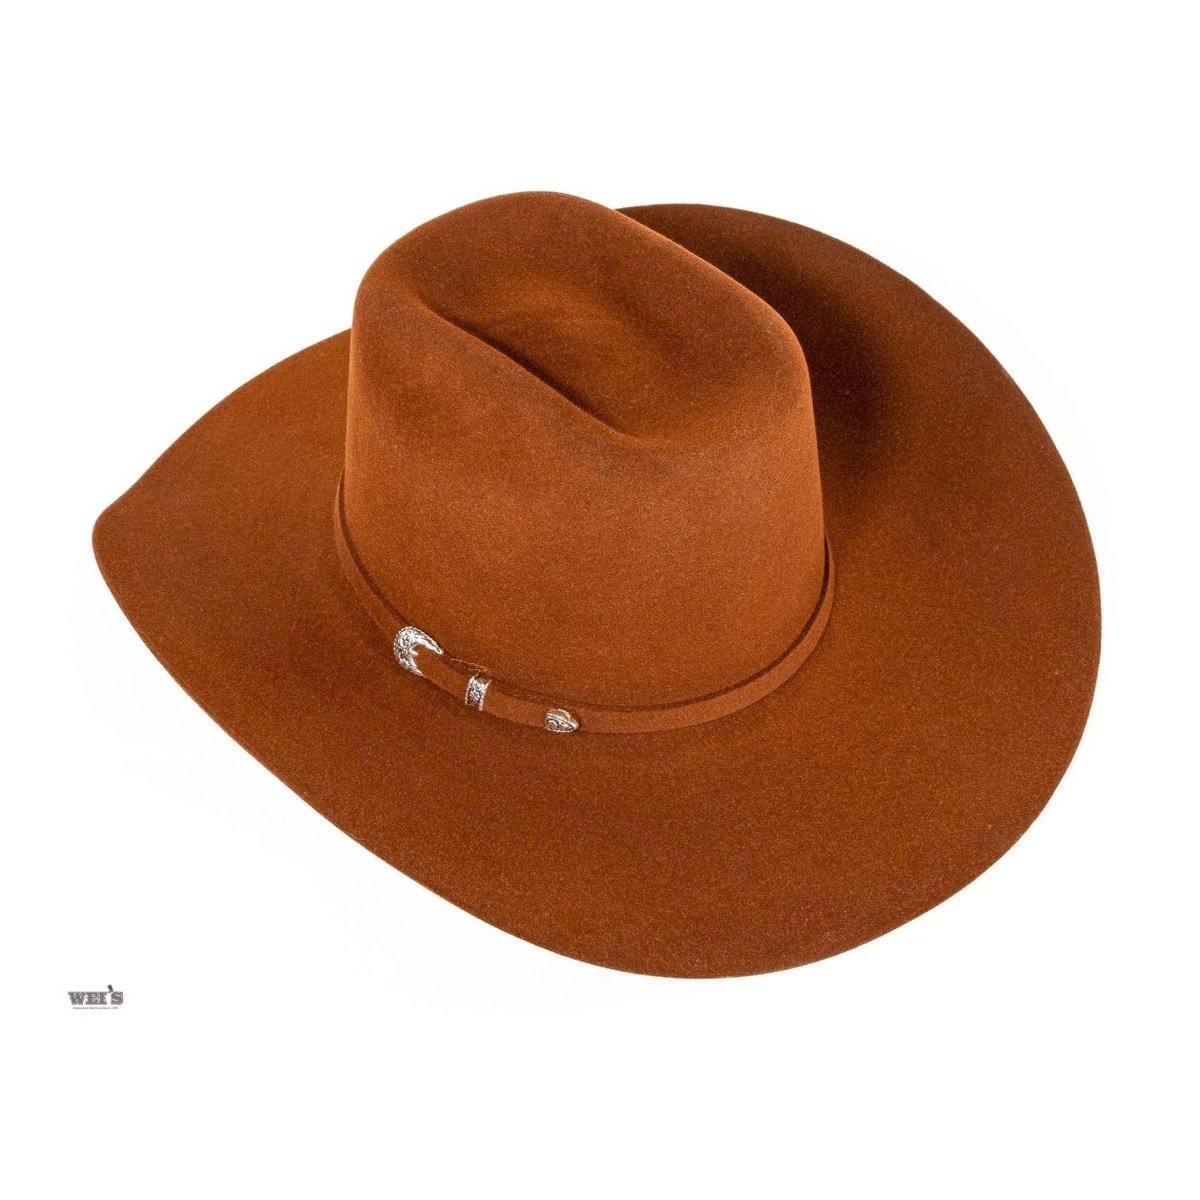 Resistol Cody Johnson The SP Rust Cowboy Felt Hat RFTHSPCJ42RU